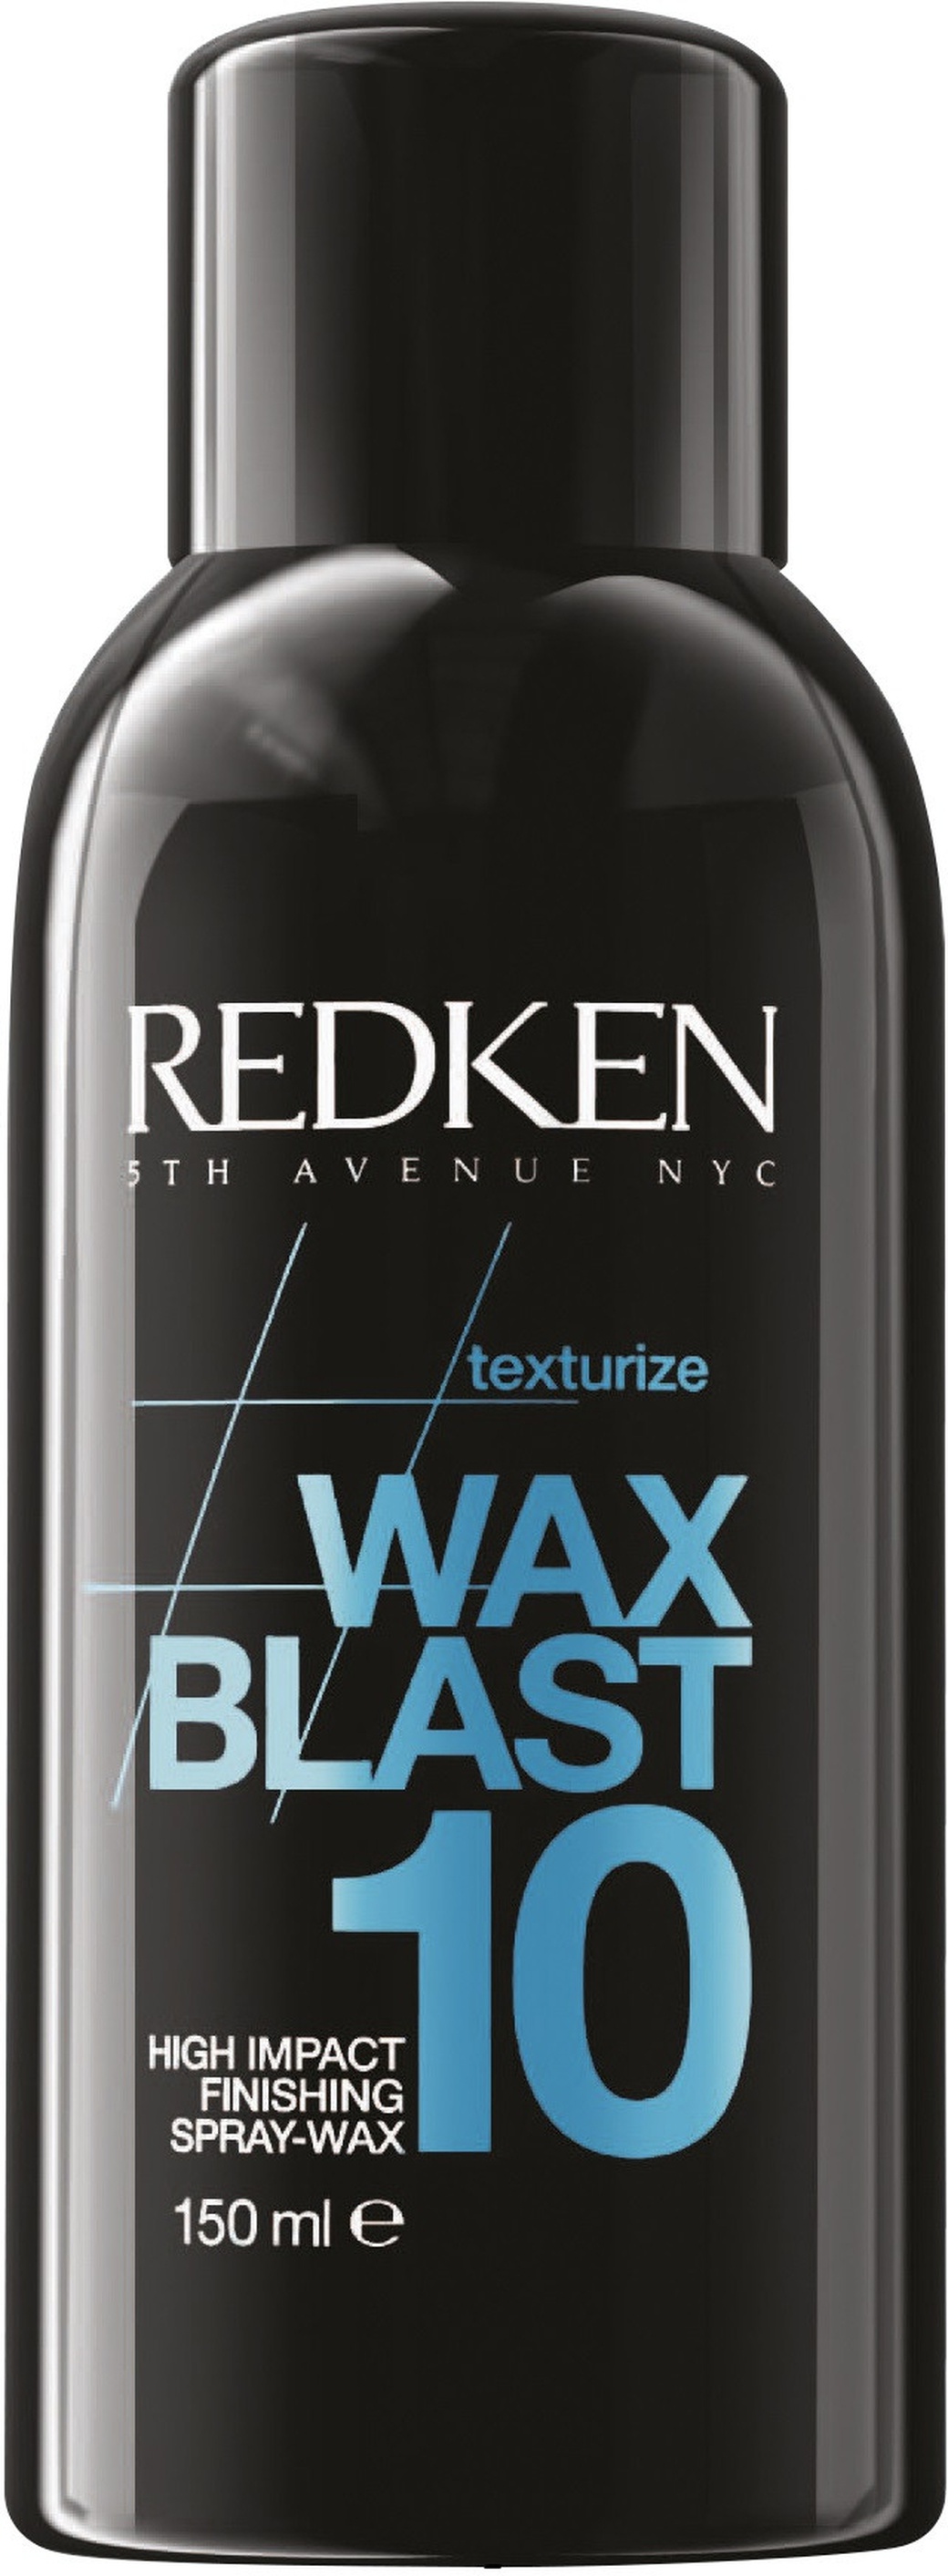 Redken Wax Blast 10 текстур. спрей-воск 150мл фото